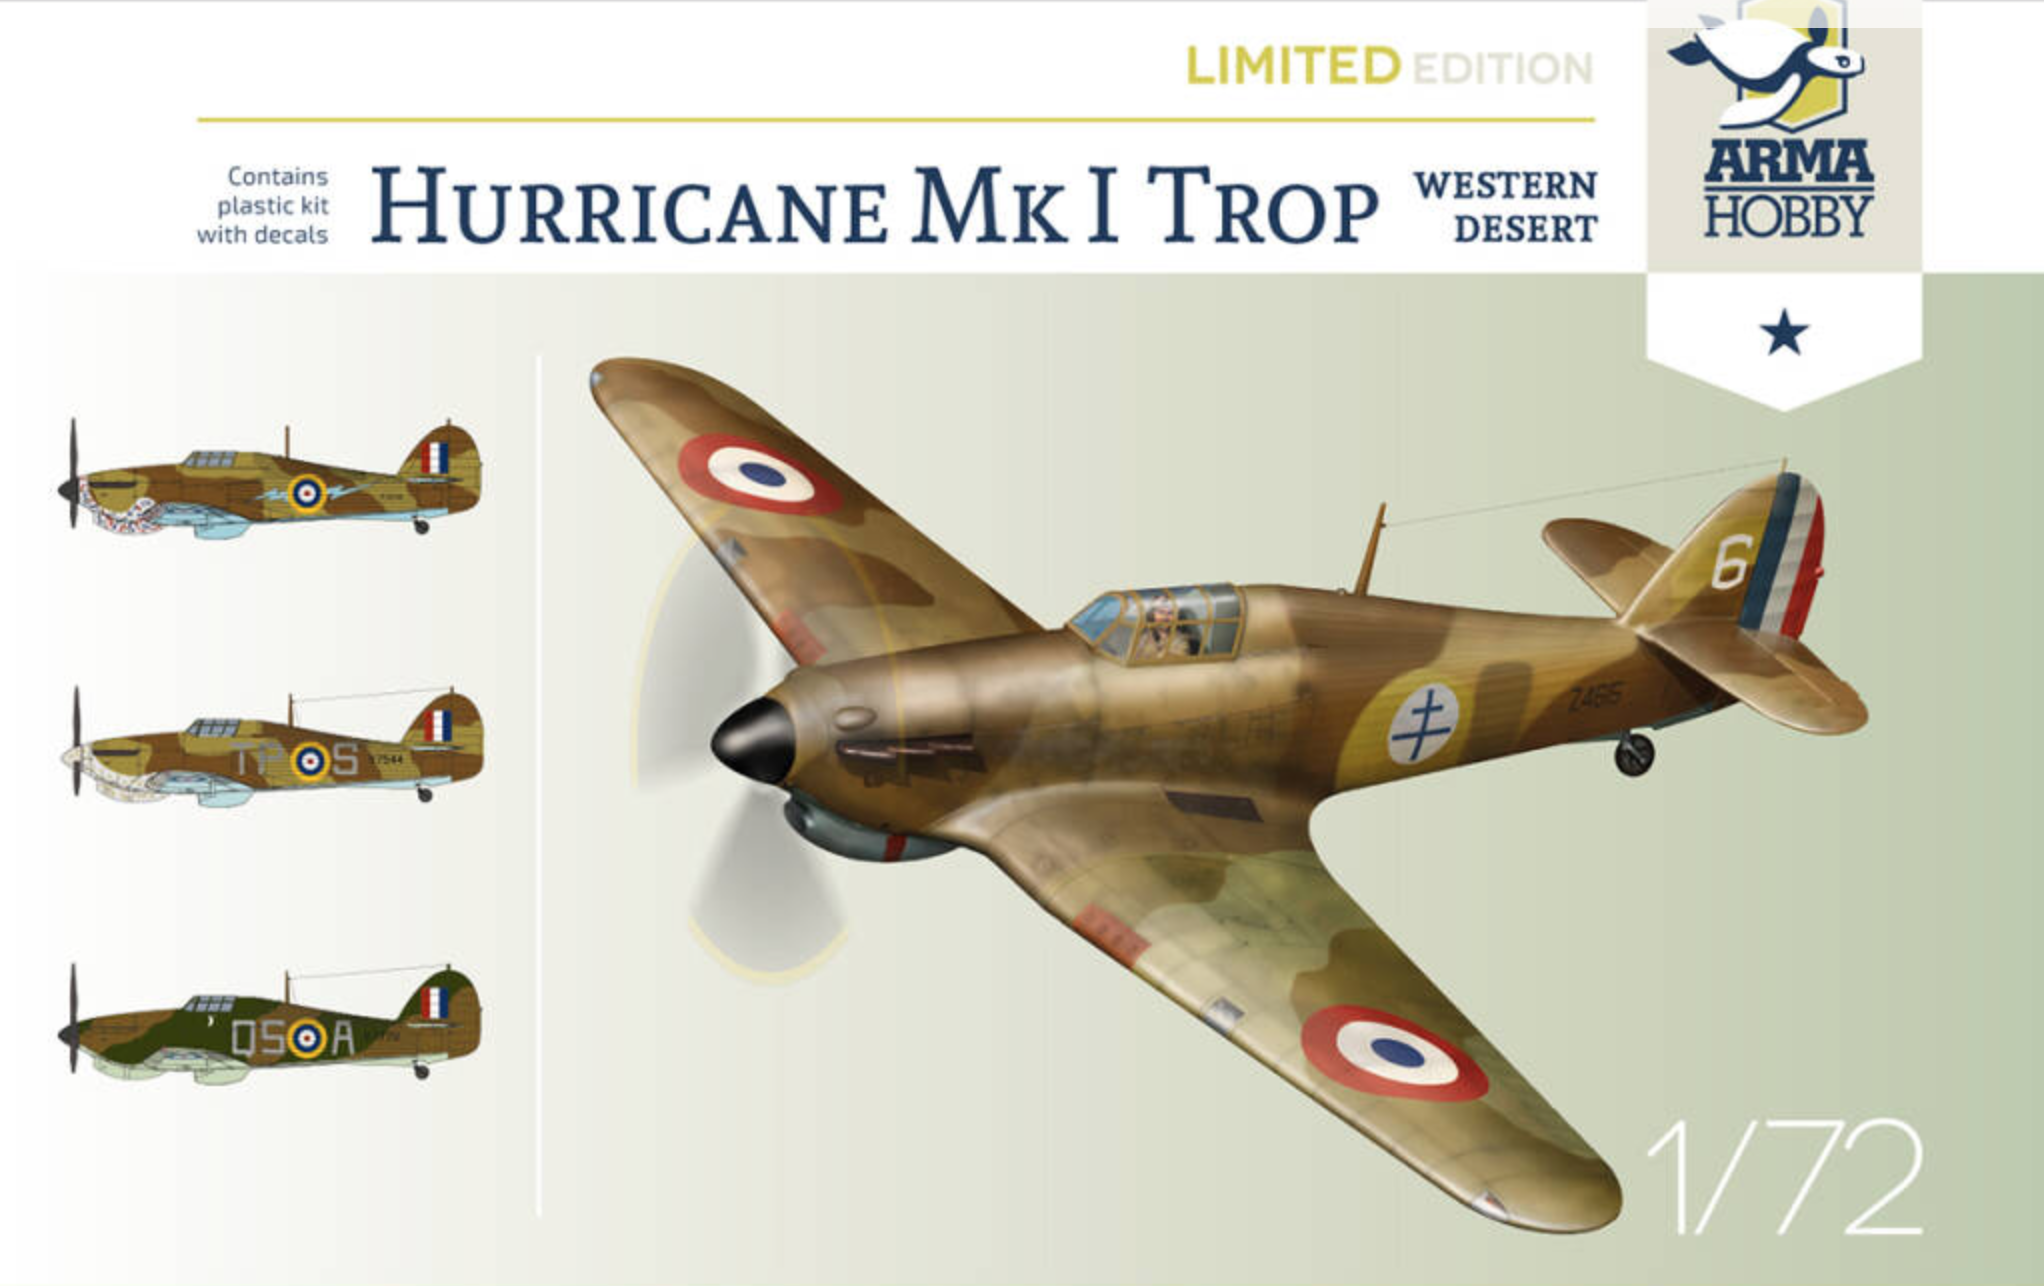 Model kit 1/72 Hawker Hurricane Mk.I trop Western Desert Limited Edition (Arma Hobby)